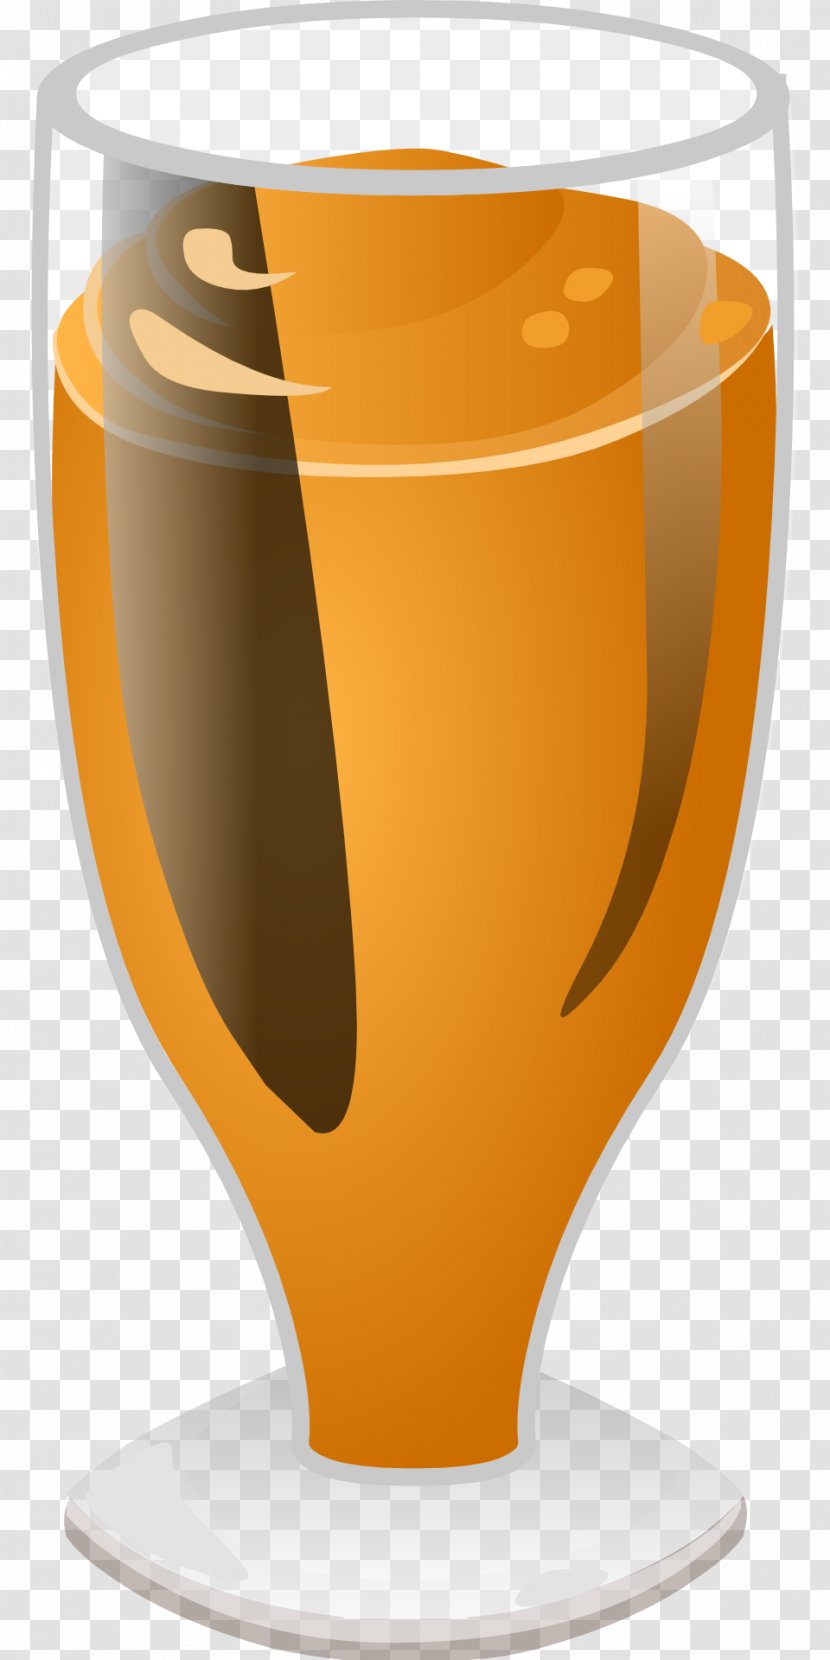 Orange Juice Drink - And The Transparent Cup Transparent PNG